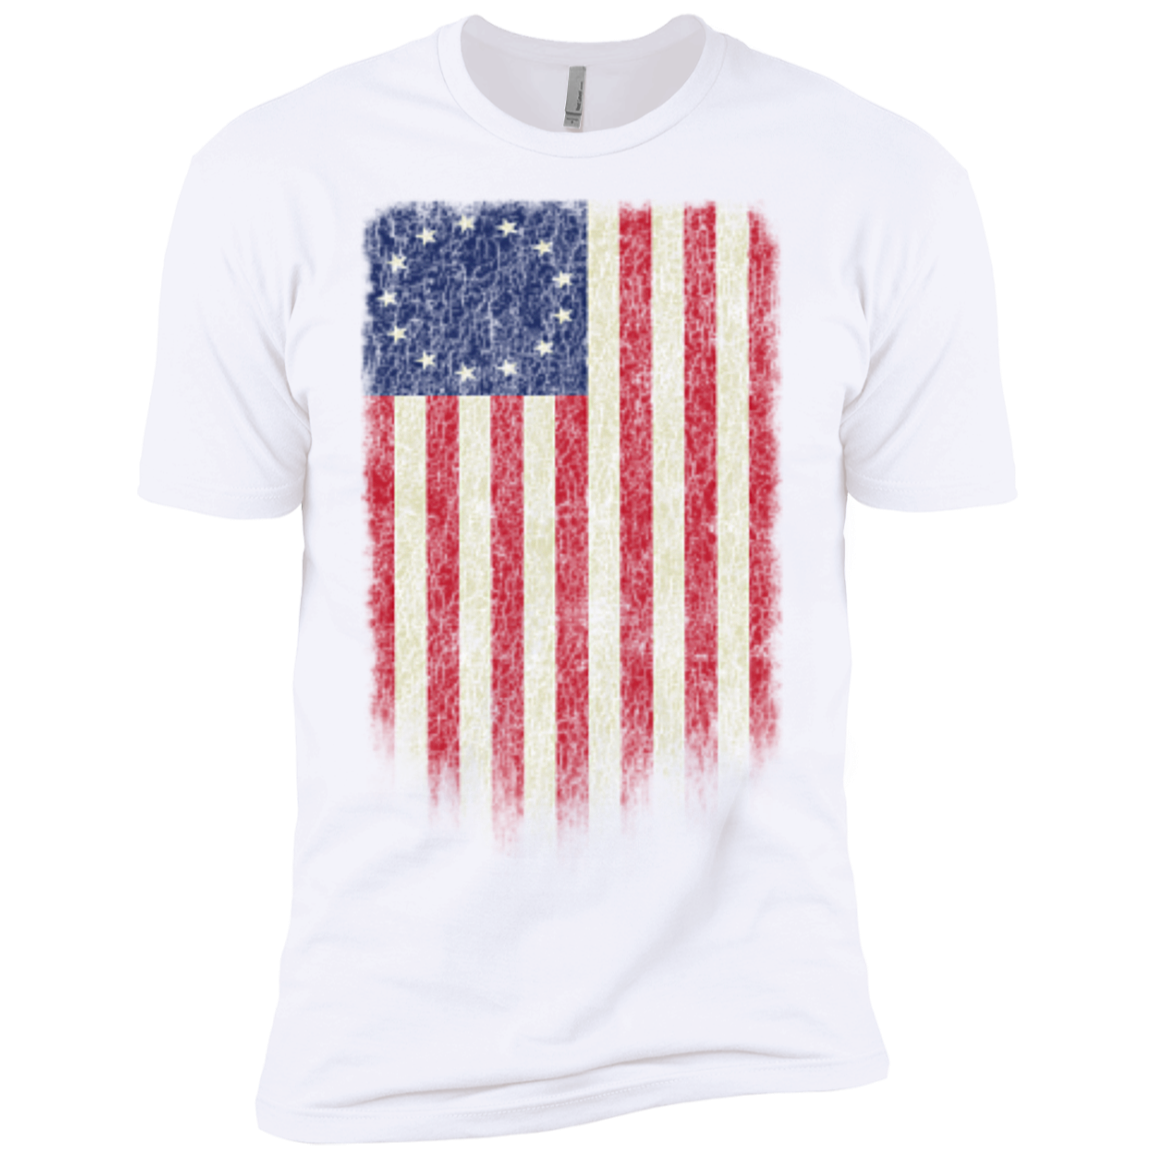 Betsy Ross Flag 13 Colonies Premium Short Sleeve T-Shirt - Trumpshop.net